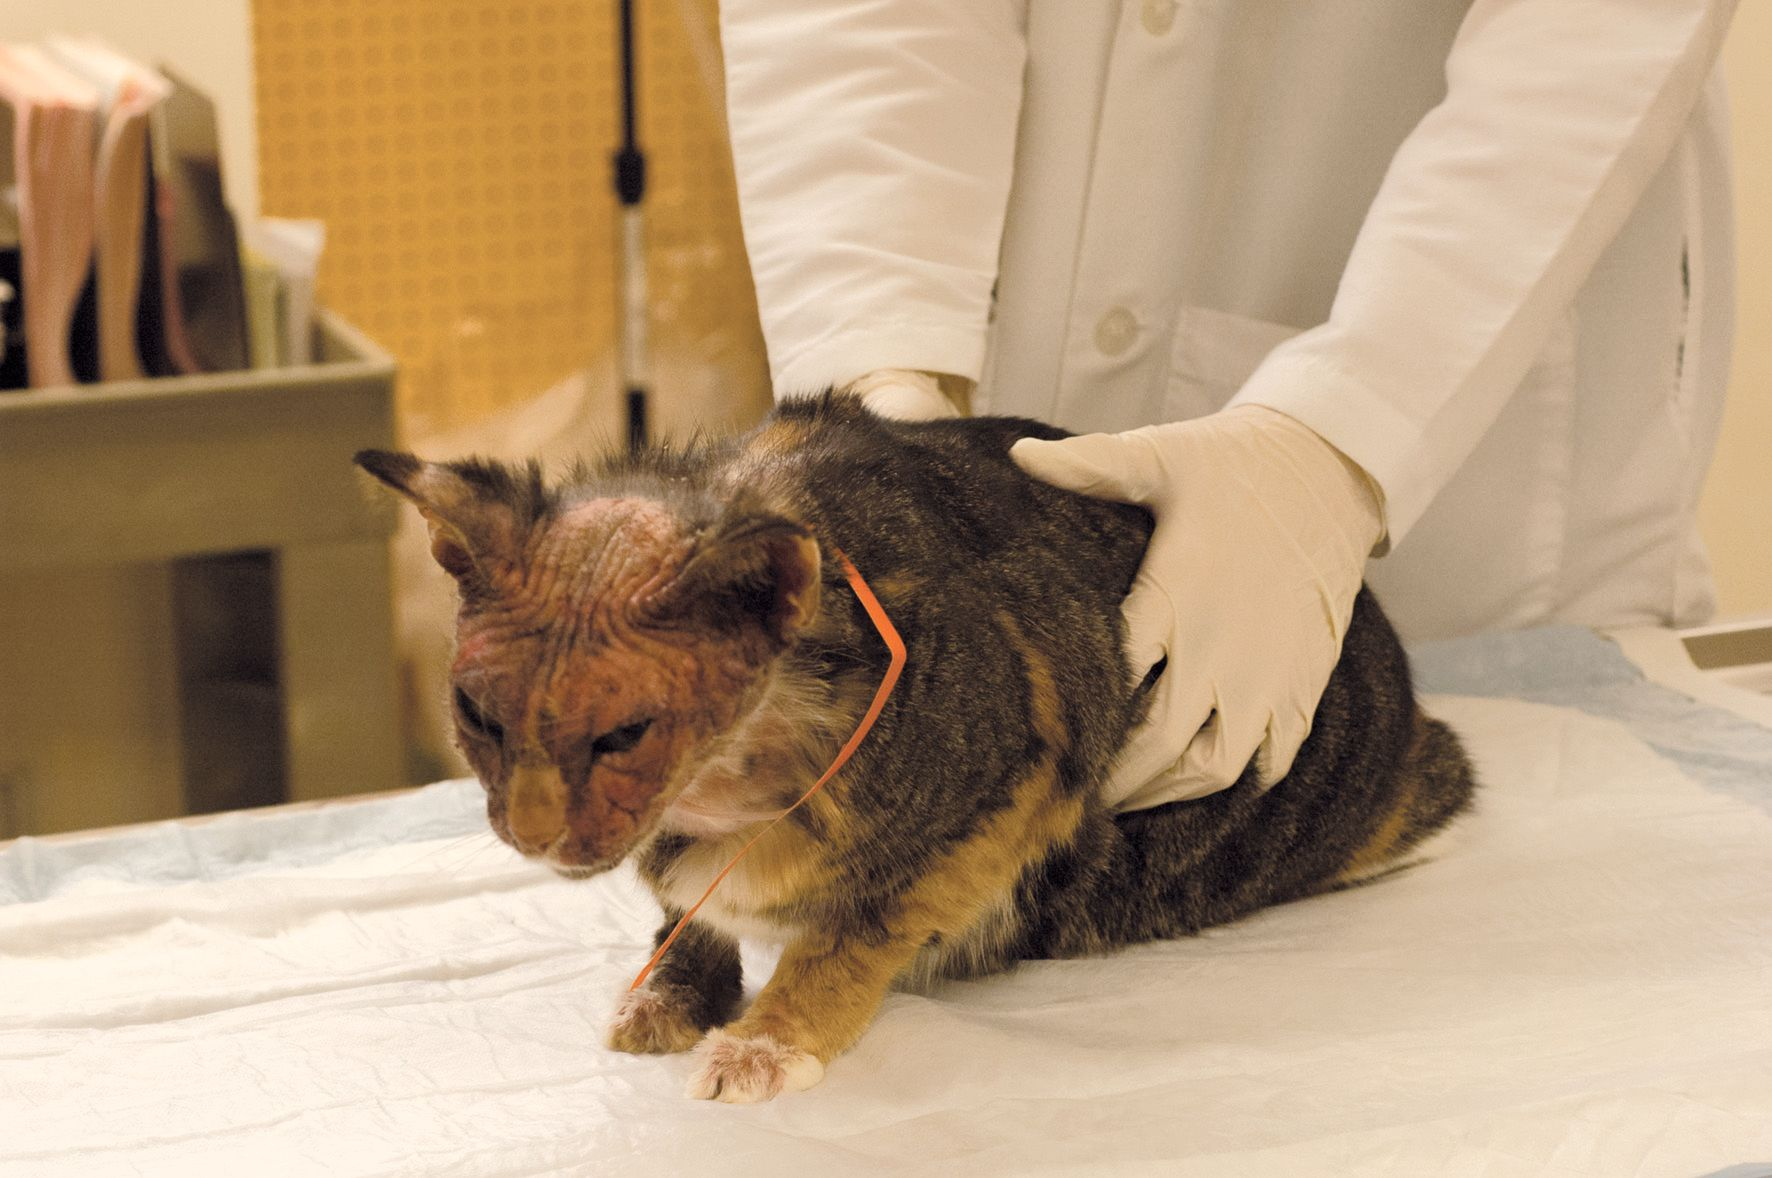  CAFR로 인해 발생한 속립성(좁쌀 형태) 피부염 증상으로 고양이의 두경부에 표피박리(excoriation)가 발견될 수 있다.